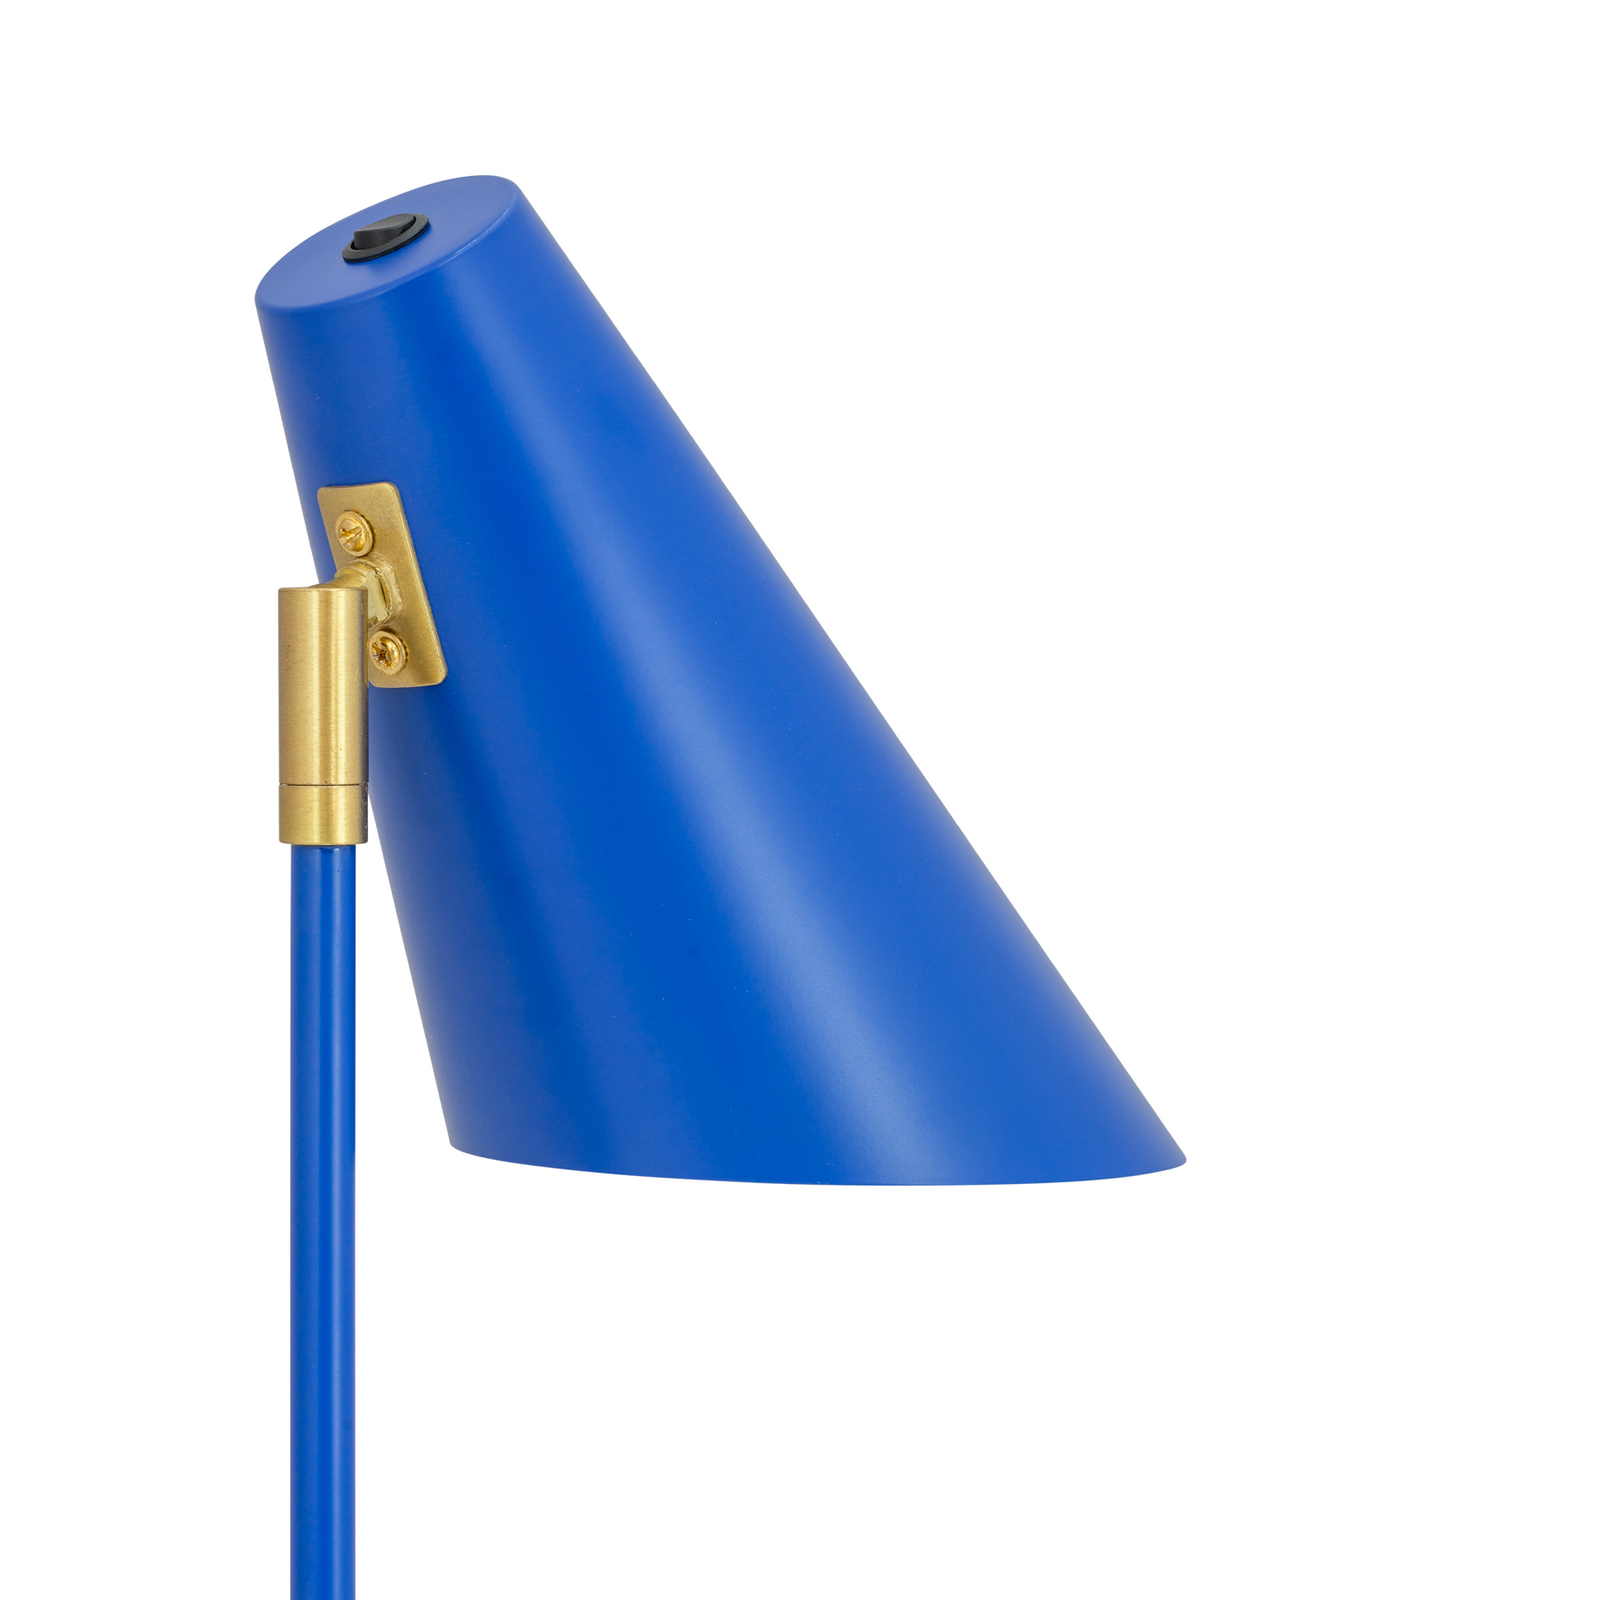 Dyberg Larsen Cale tafellamp, donkerblauw